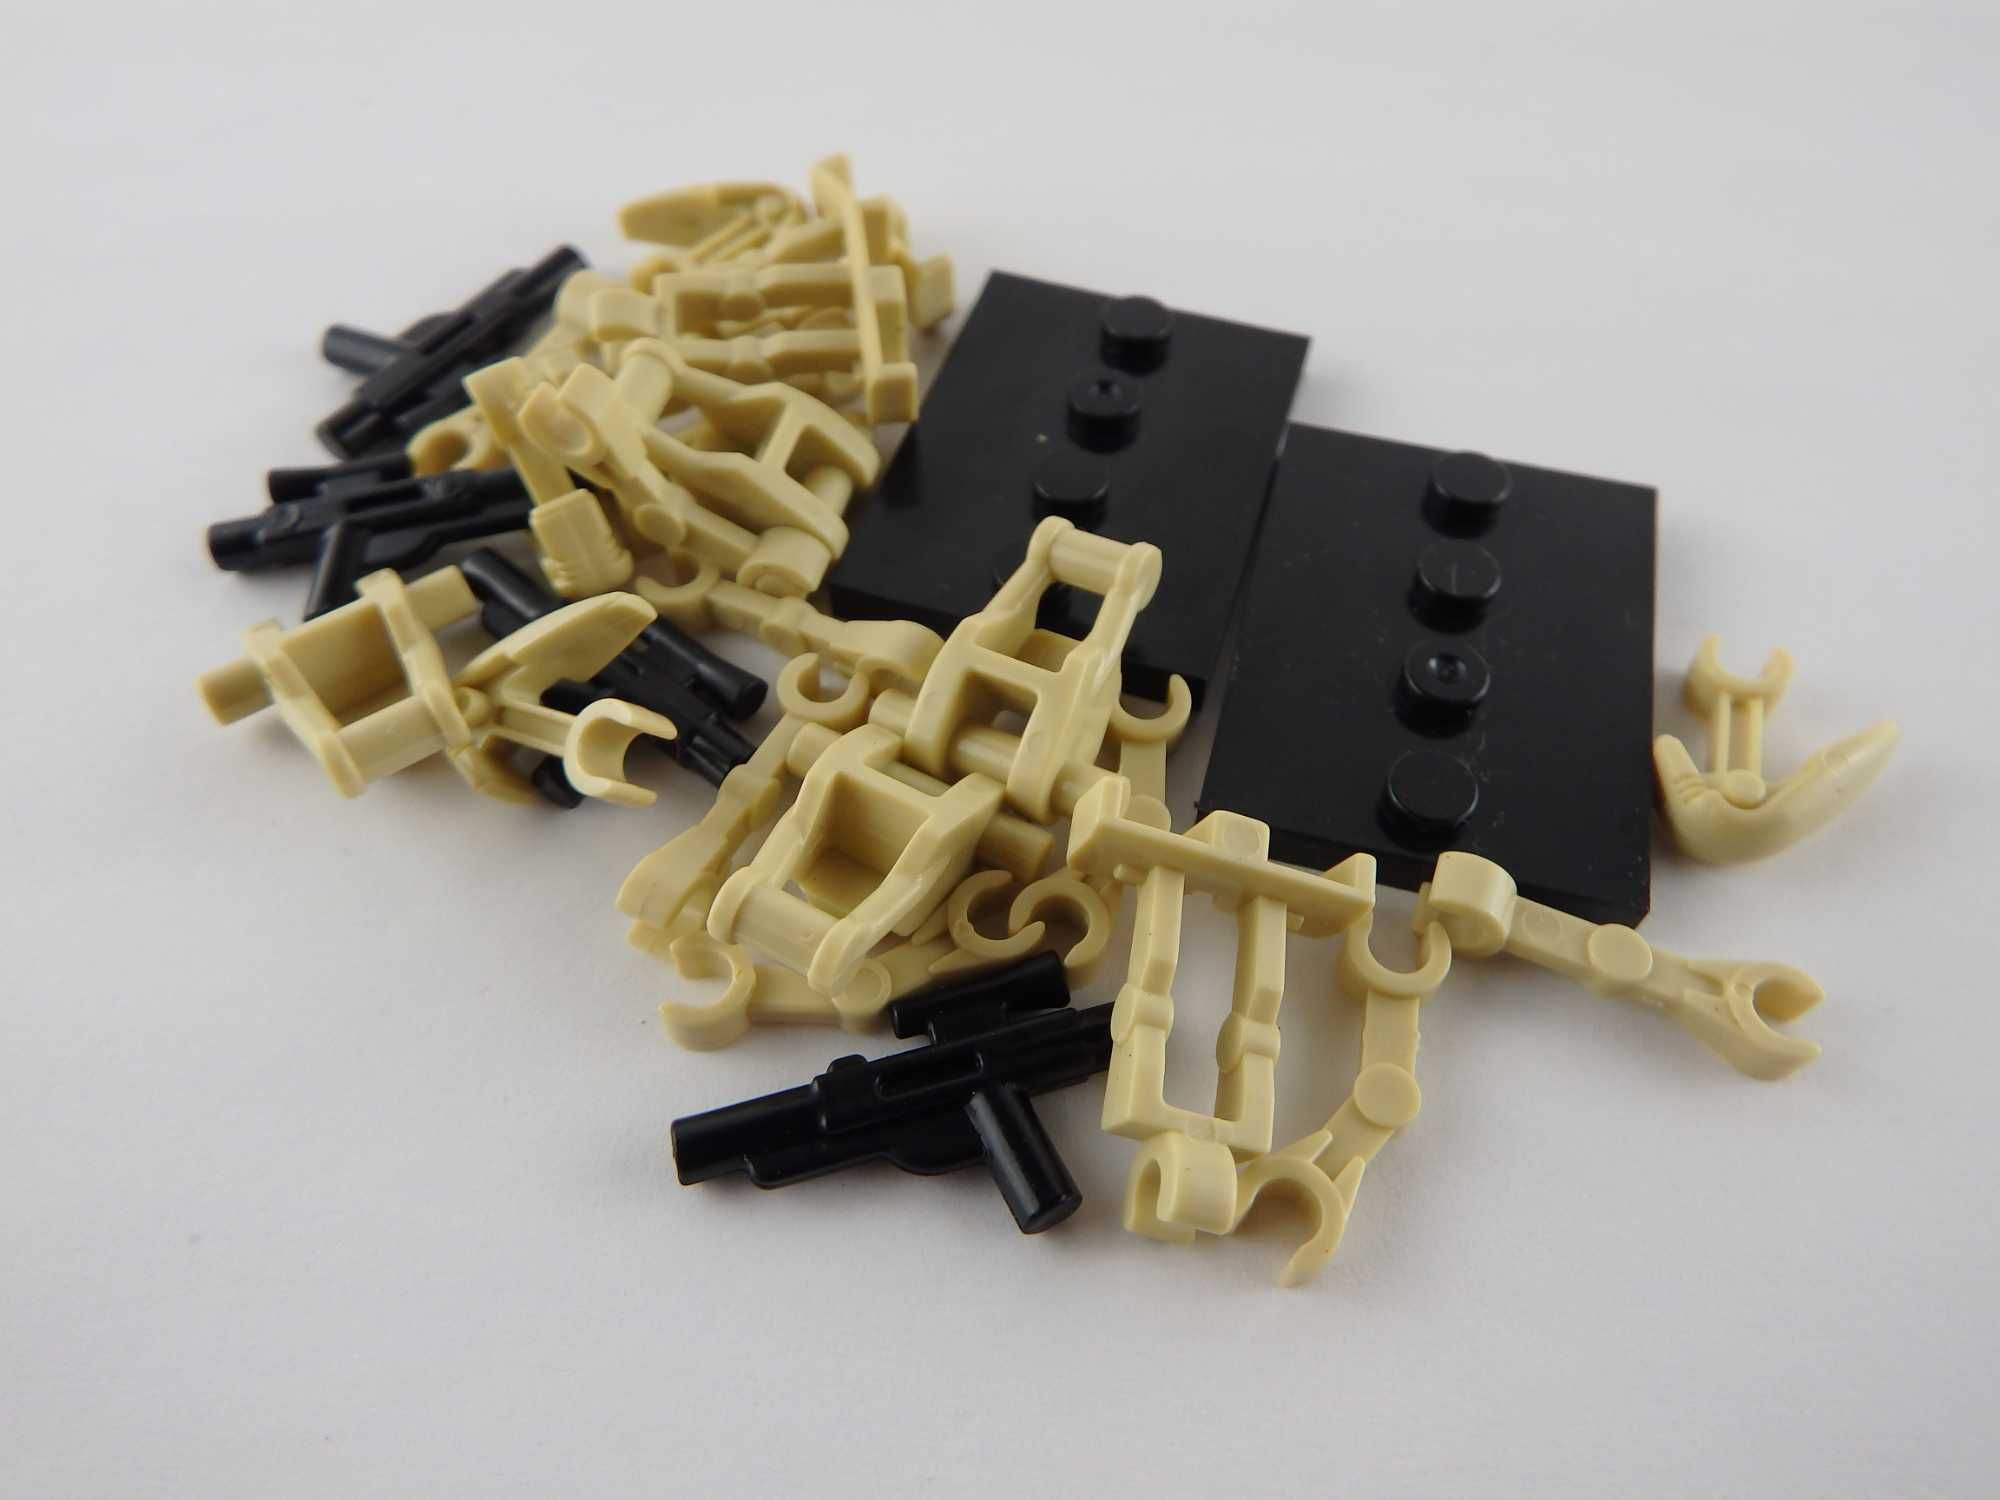 20 Sztuk Figurek Starwars Droidy Bojowe Dodatek Do Kolekcji Lego